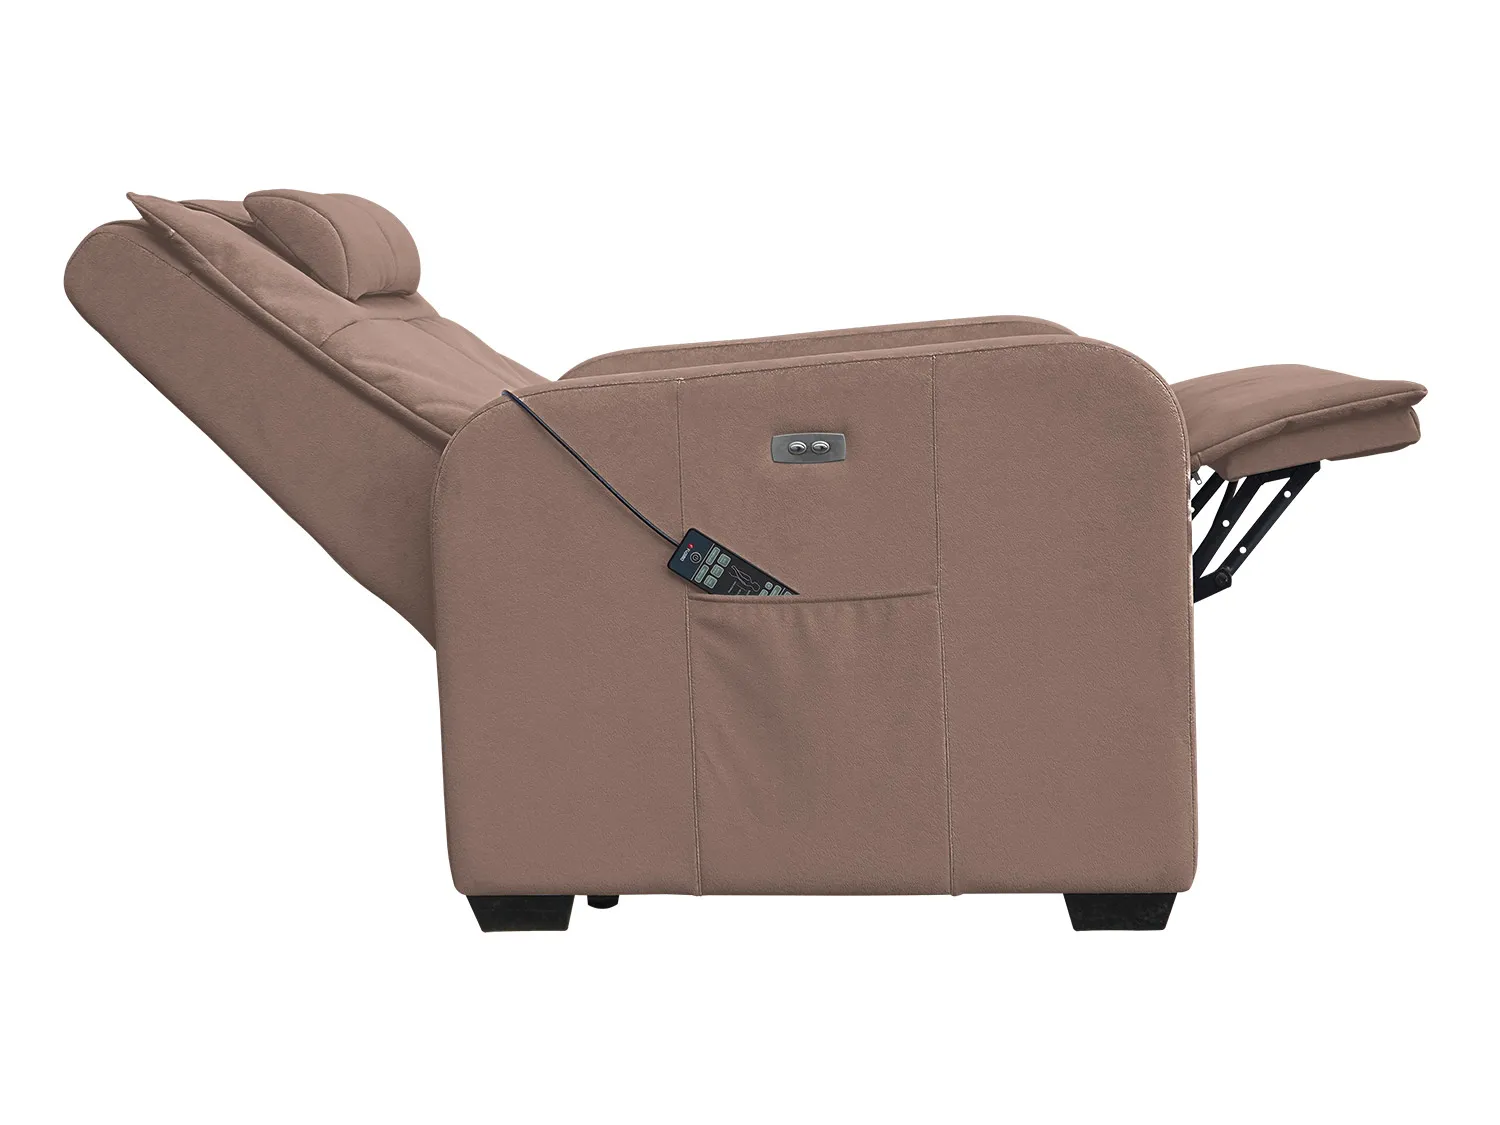 Массажное кресло реклайнер с подъемом FUJIMO LIFT CHAIR F3005 FLFL Терра (Sakura 20)